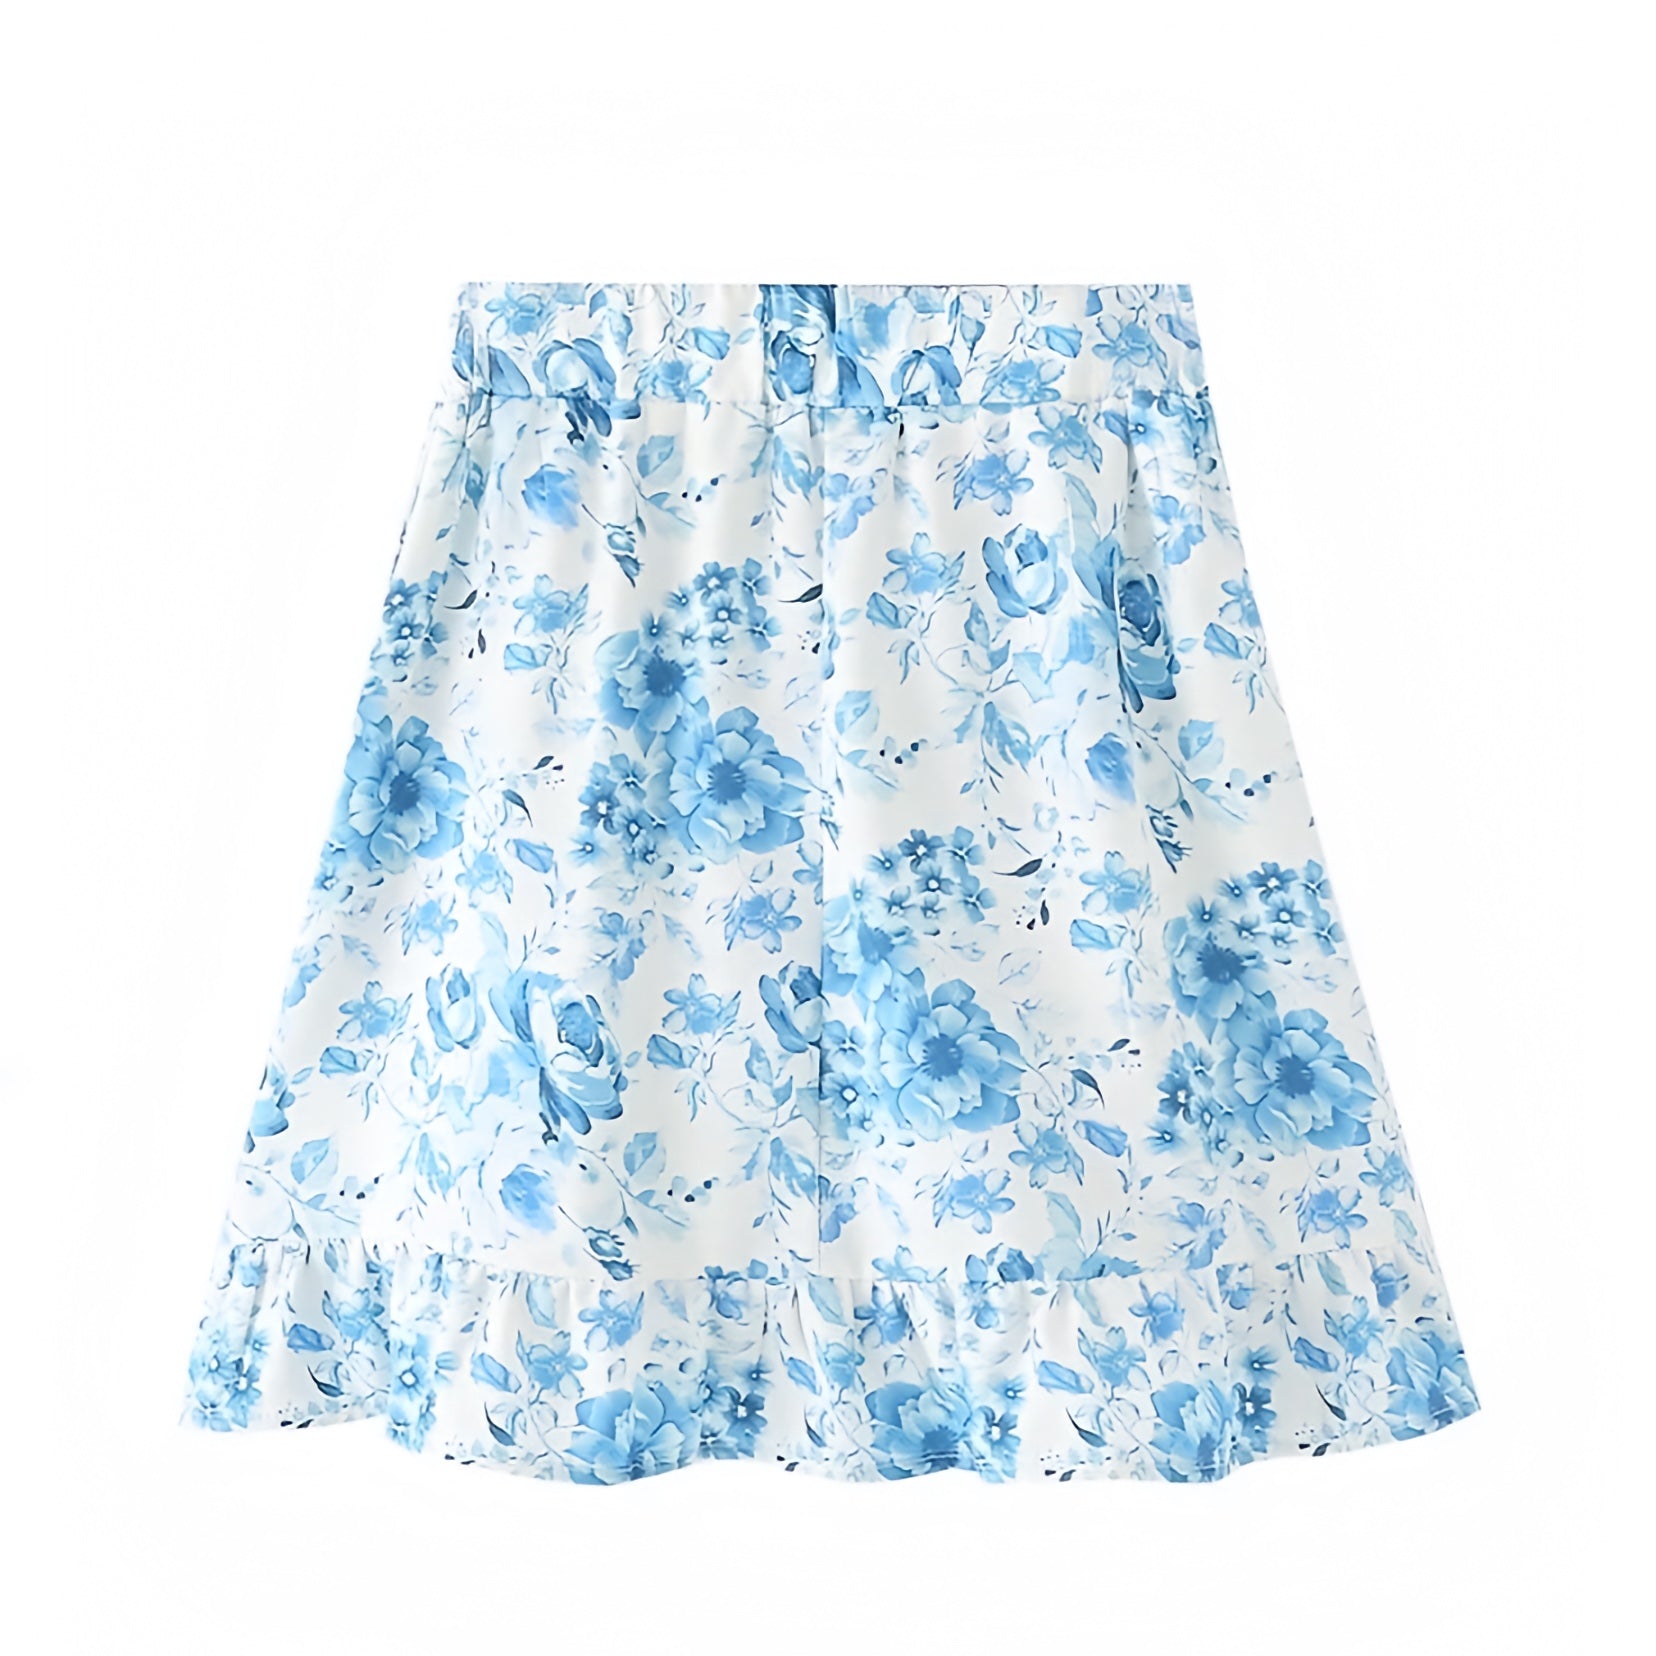 floral-print-light-blue-white-multi-color-flower-patterned-slim-fitted-waist-layered-ruffle-trim-fit-and-flare-mid-high-rise-waisted-drop-waist-tiered-linen-flowy-boho-bohemian-short-mini-skirt-skort-women-ladies-teens-tweens-chic-trendy-spring-2024-summer-elegant-casual-semi-formal-feminine-preppy-style-coastal-granddaughter-grandmillennial-beach-wear-vacation-skirts-altard-state-zara-revolve-loveshackfancy-subdued-dupe